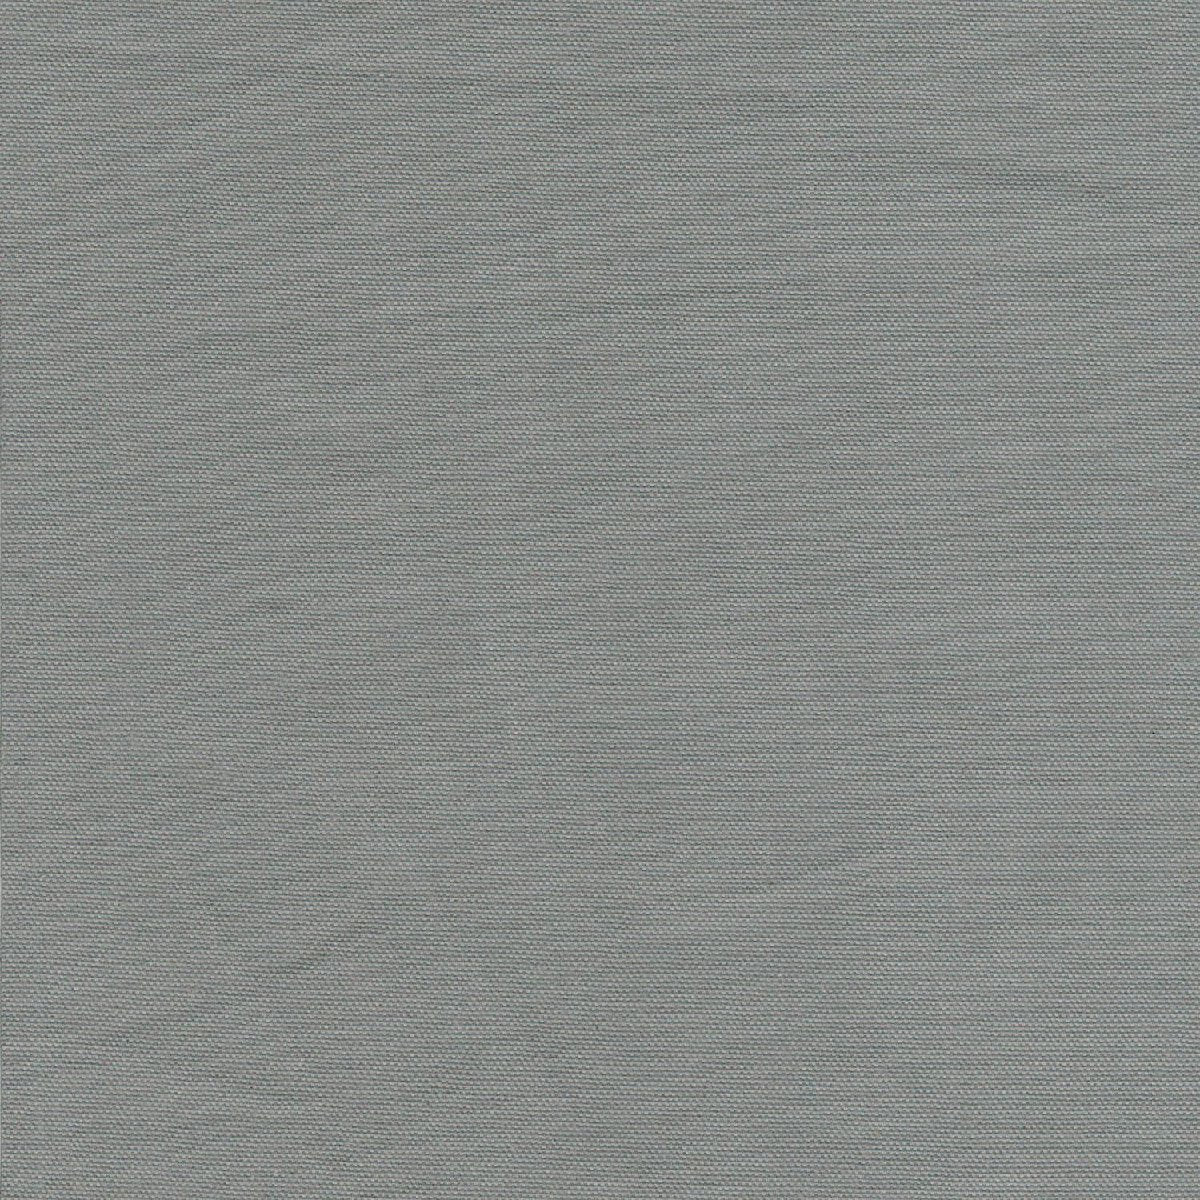 Numero74 | bliss cotton canvas yoga bag | silver grey - mondocherry - material